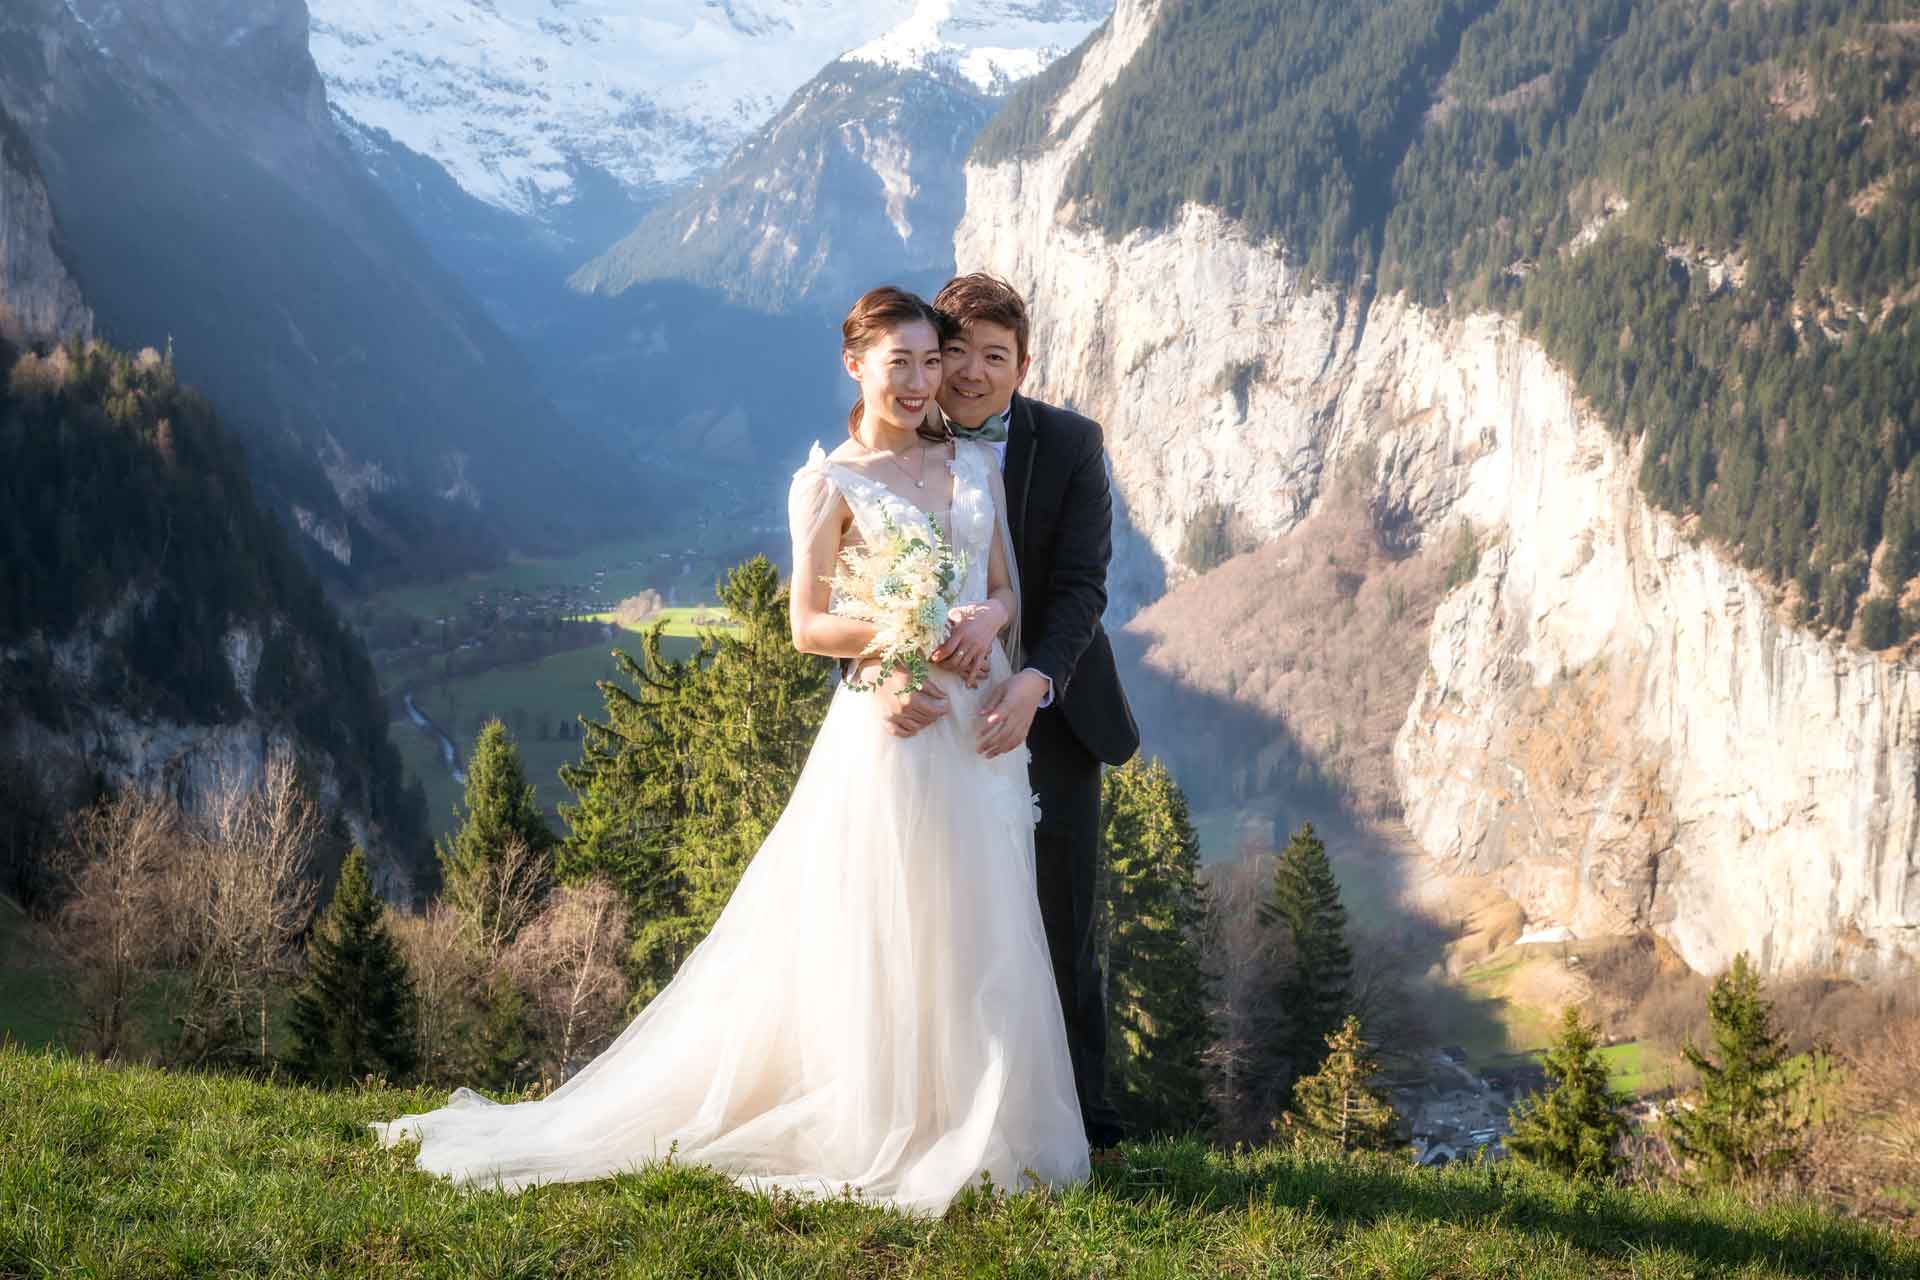 Before Wedding Photo Shoot in Lauterbrunnen